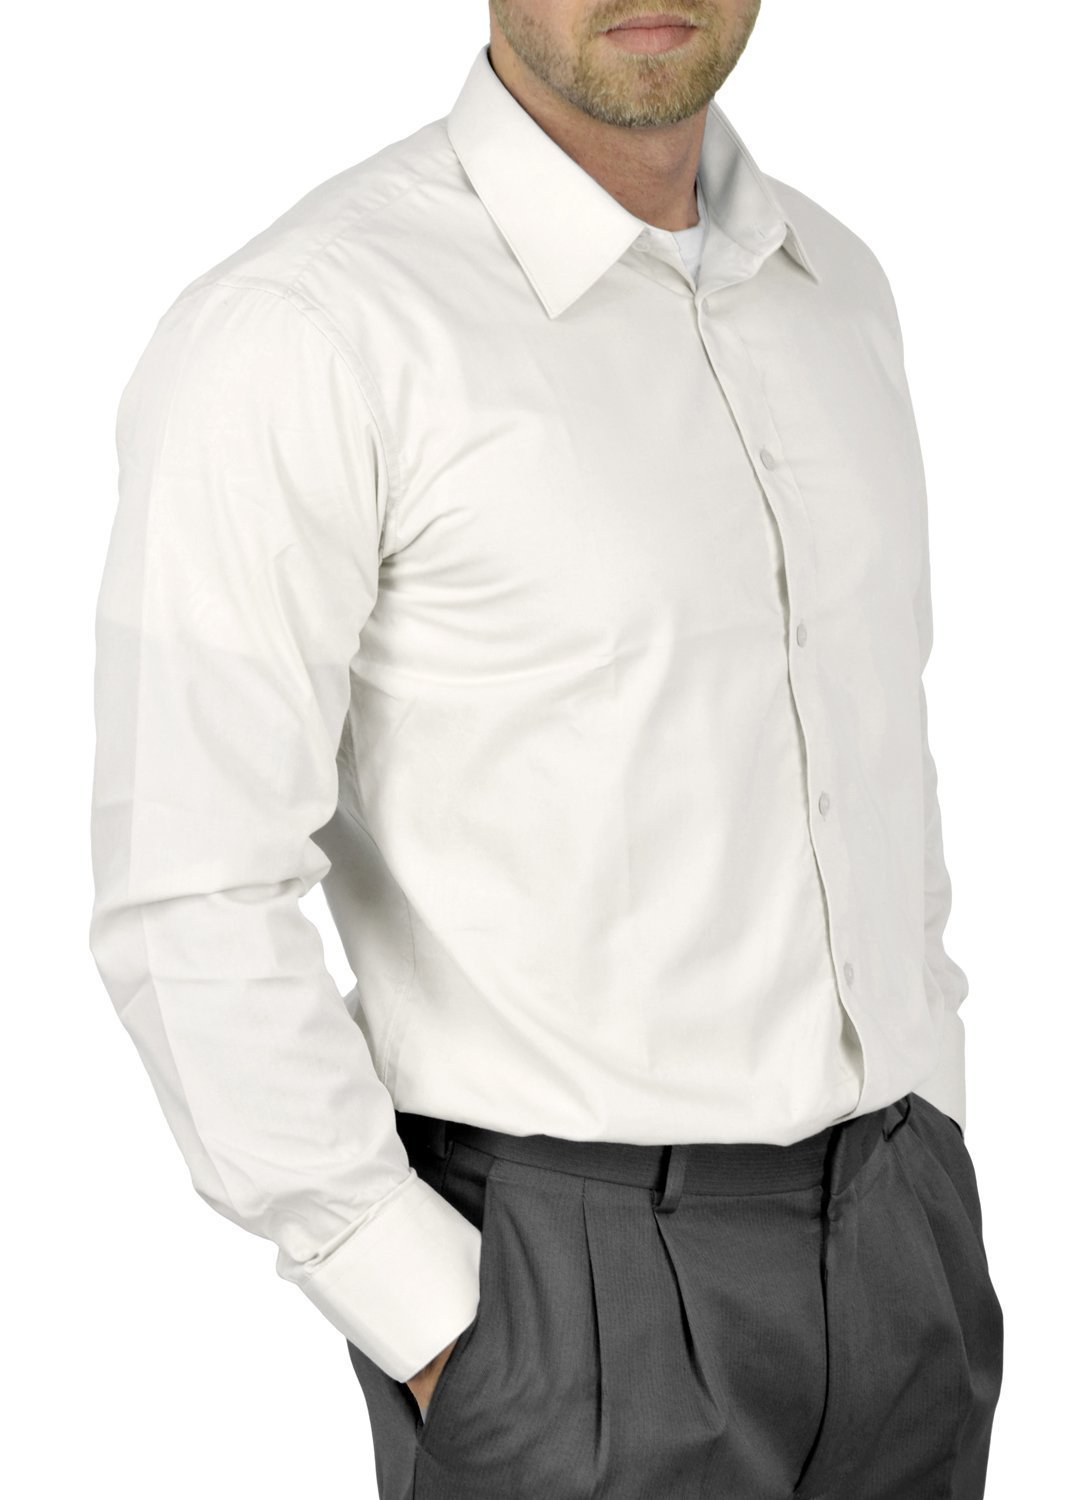 Moda Di Raza Mens Dress Shirt Slim and Regular Fit Office Casual French Cuff White 17.5